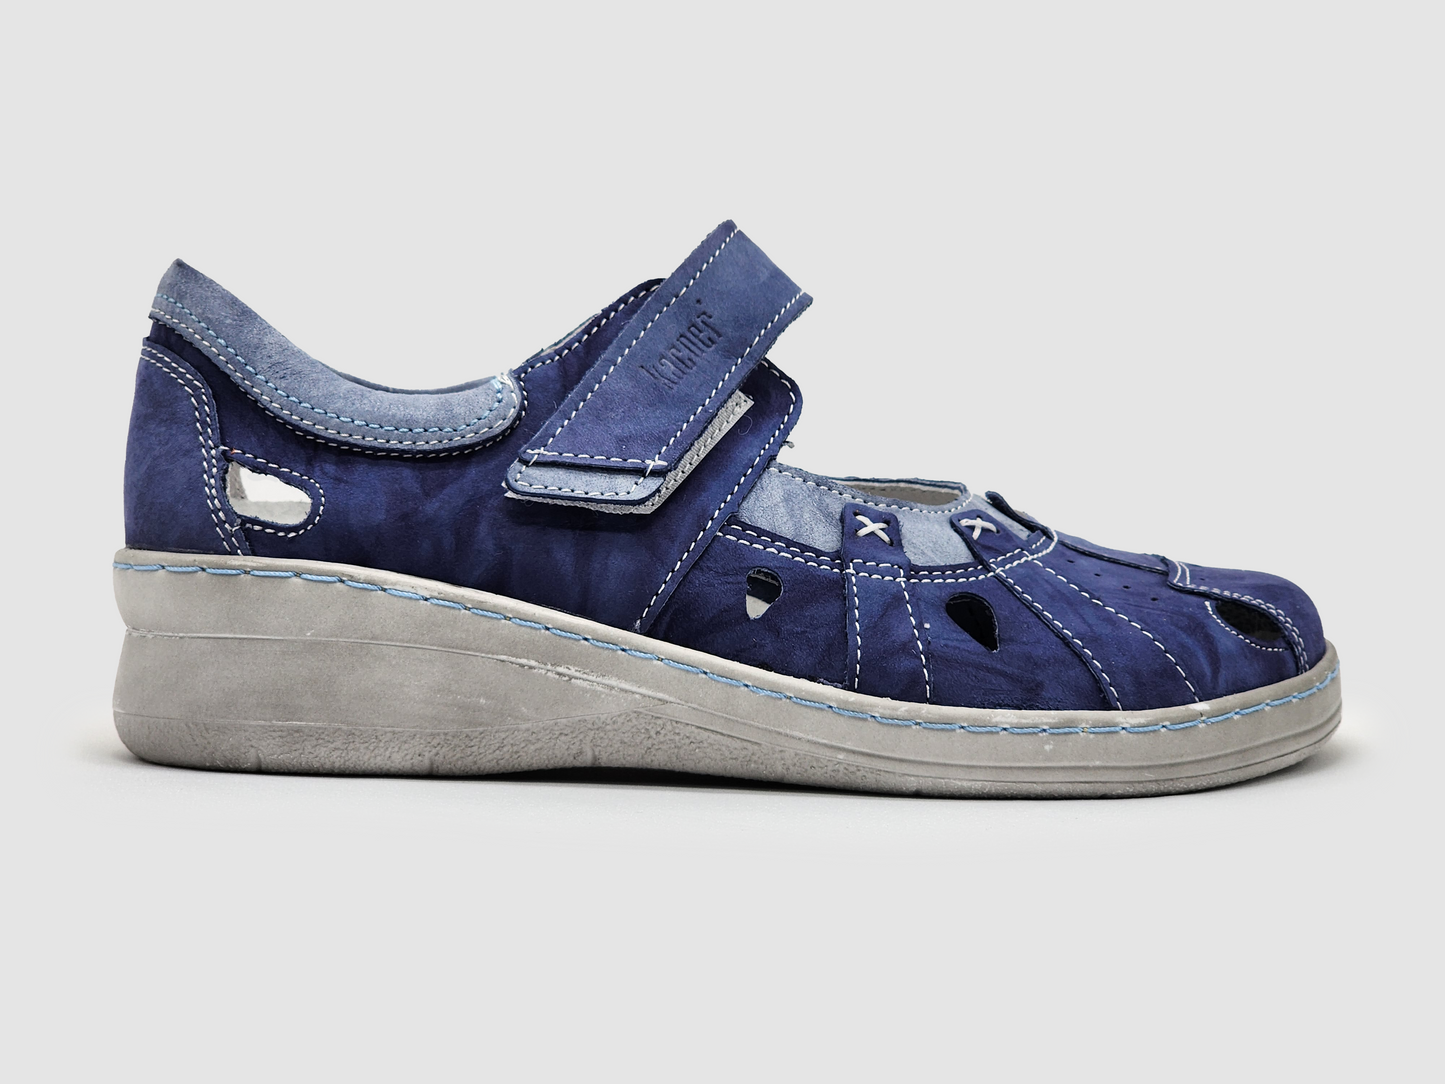 Women's Dr Wellness Leather Sandals - Blue - Kacper Global Shoes 